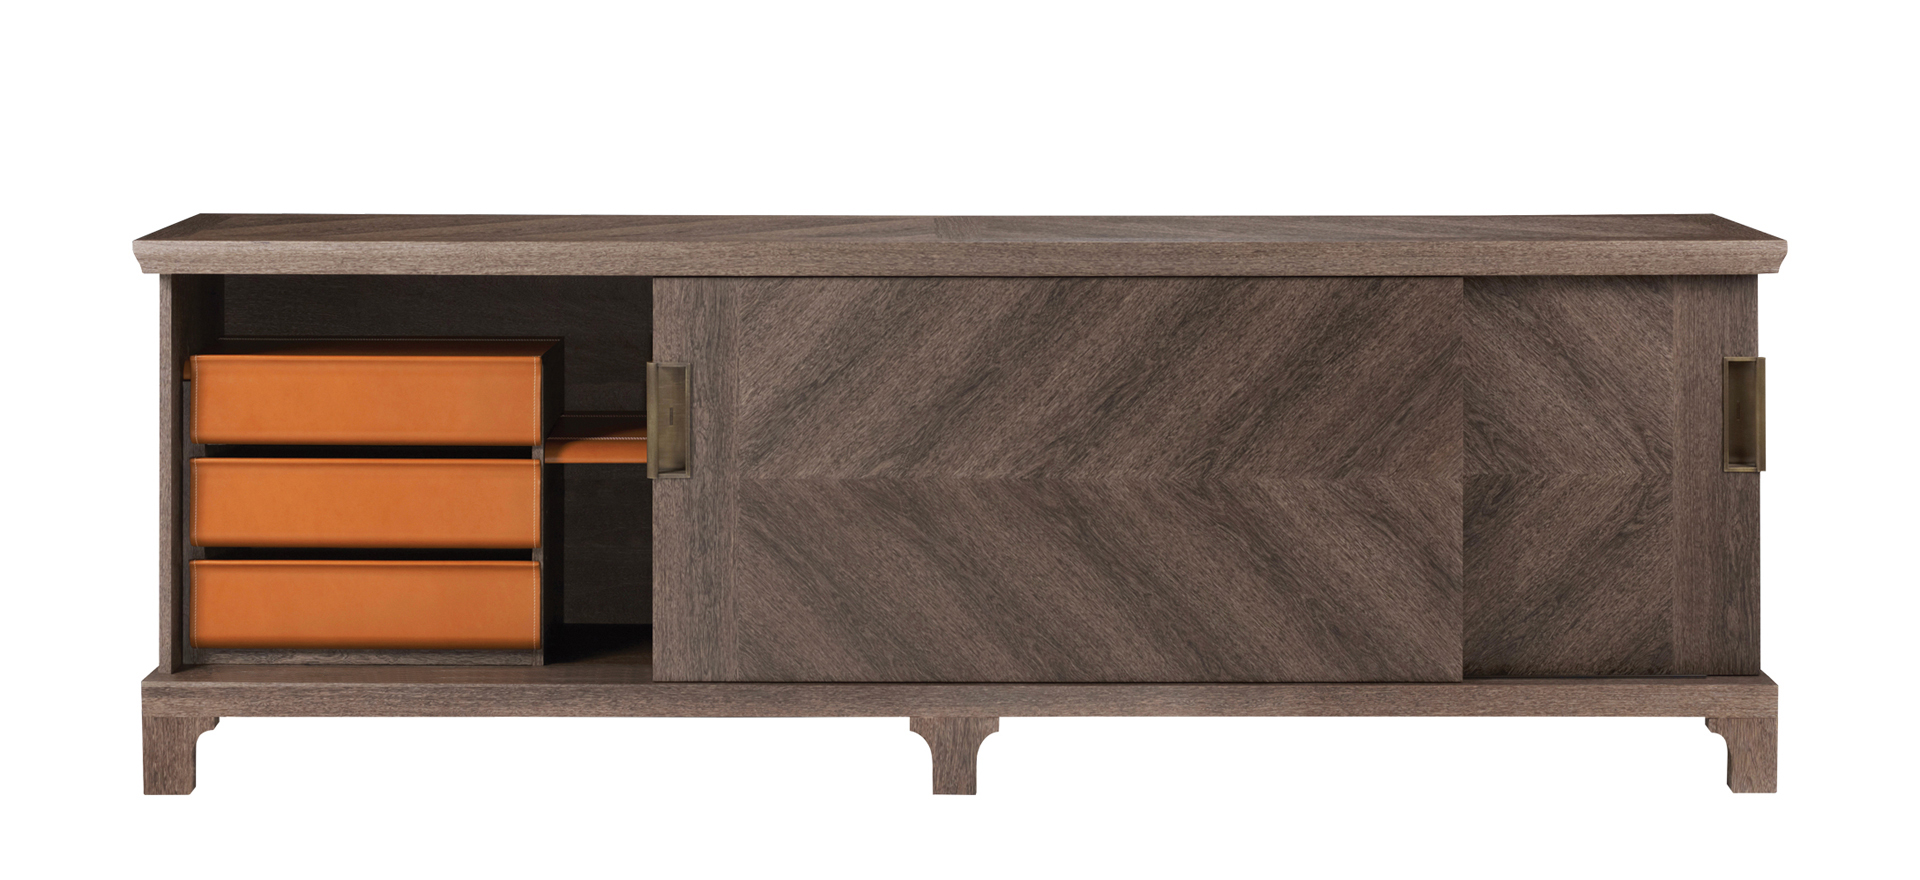 /mediaOolong是一款带滑动门的木质矮柜，置物架和抽屉配有皮革面板，青铜把手，请参见Promemoria产品目录%20|%20Promemoria